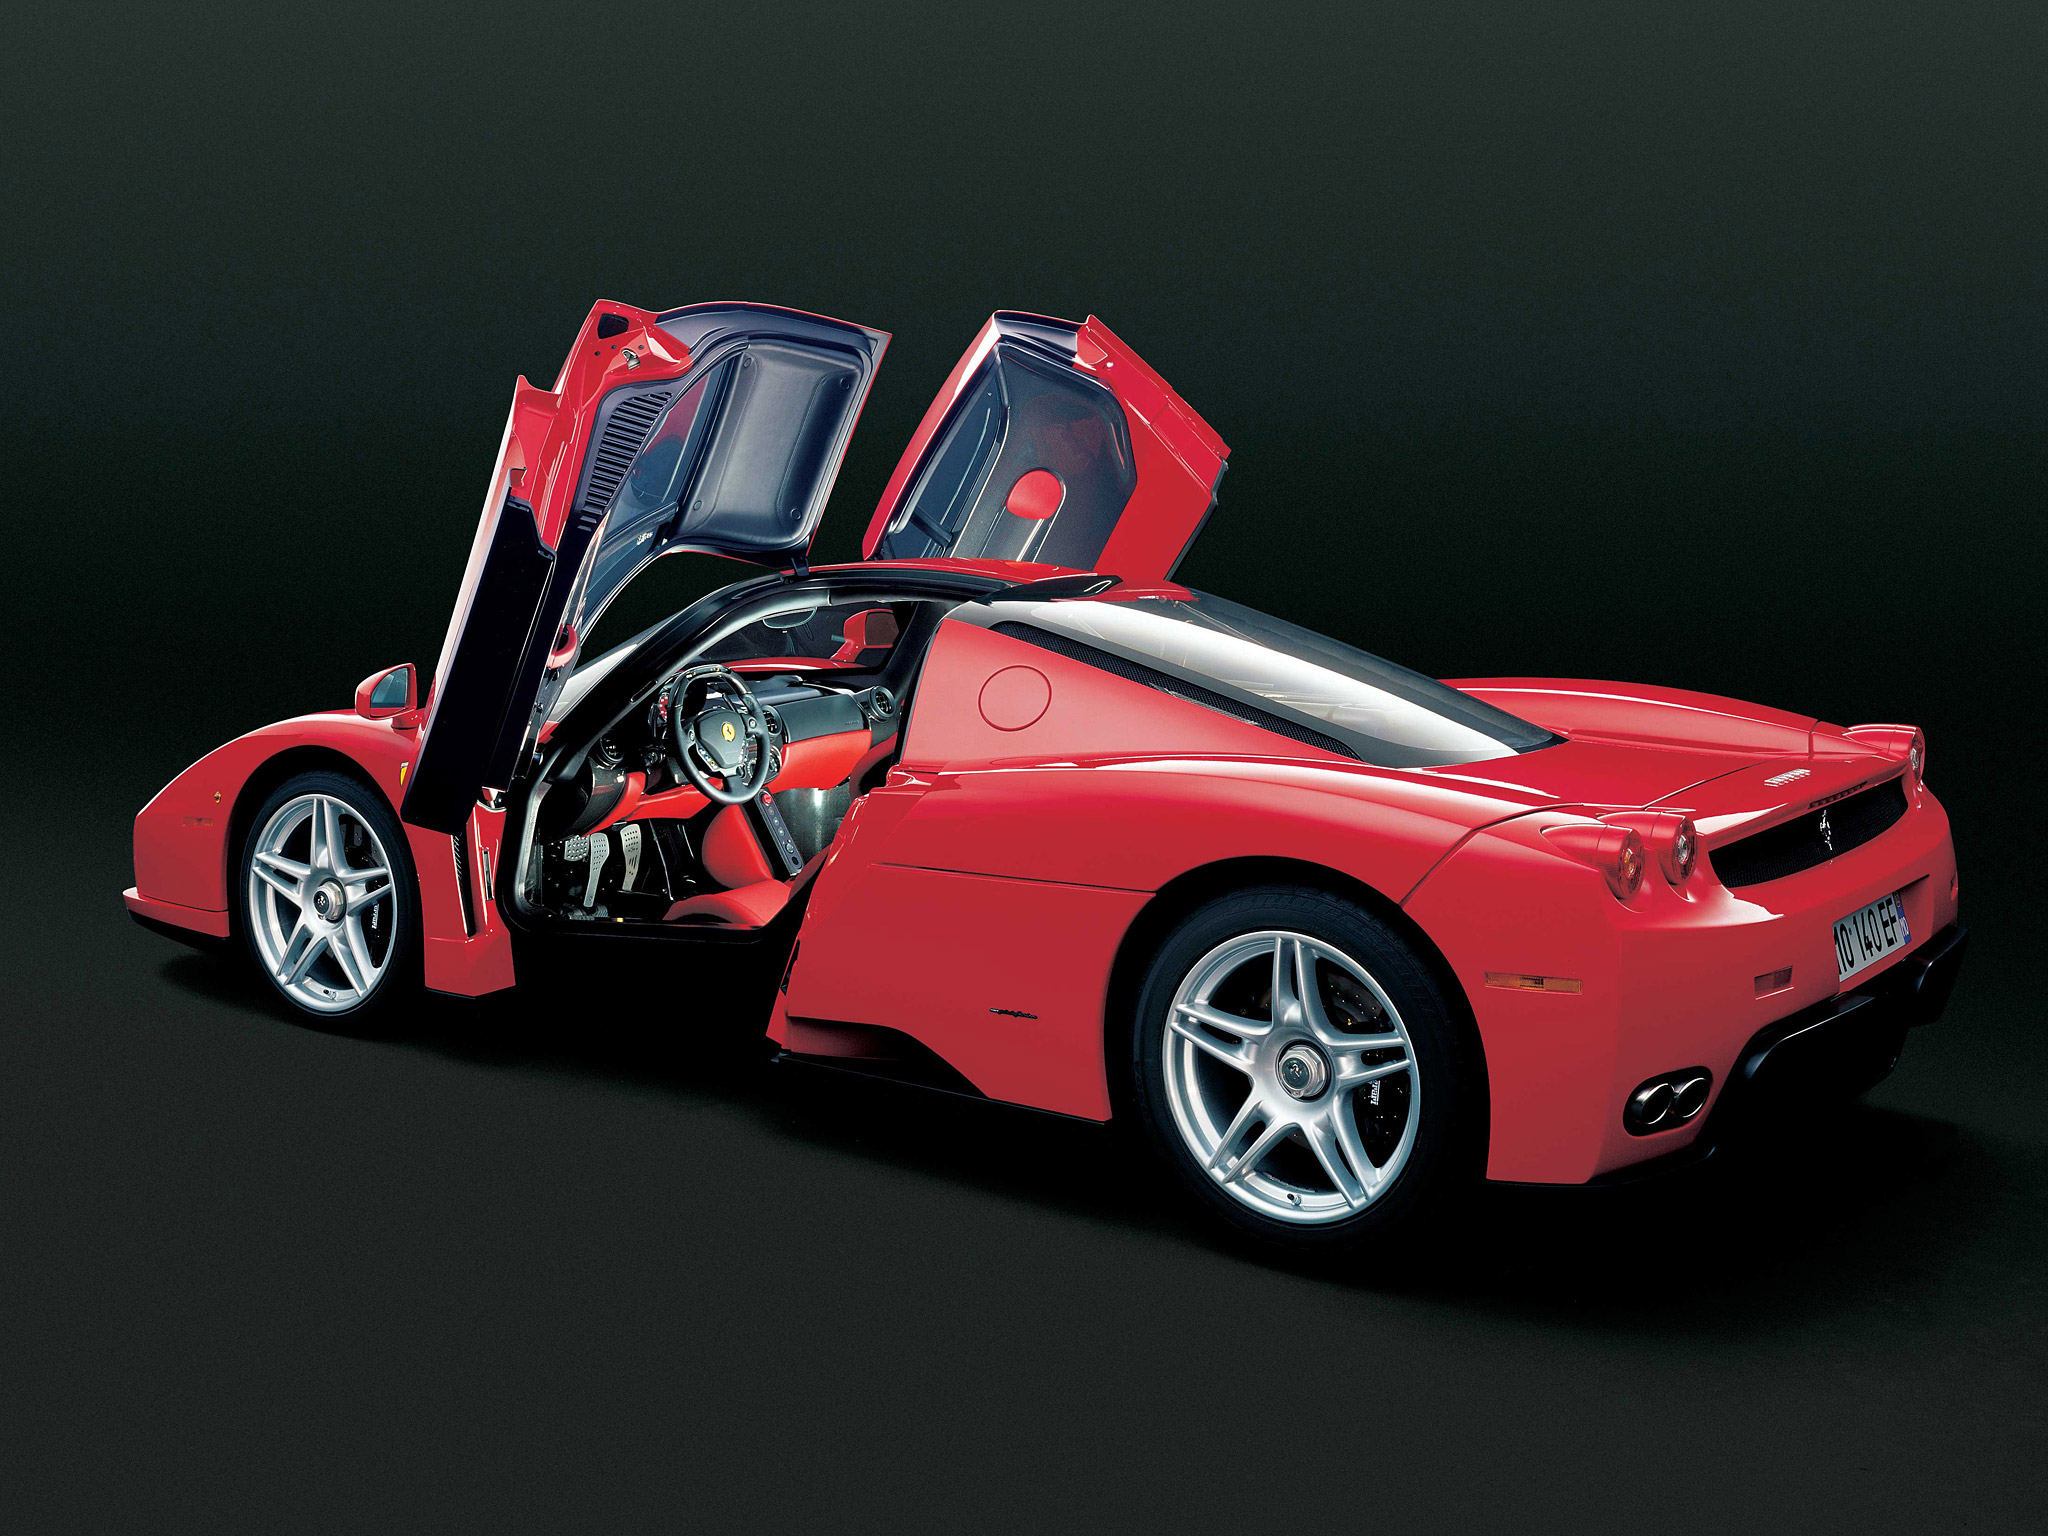  2002 Ferrari Enzo Wallpaper.